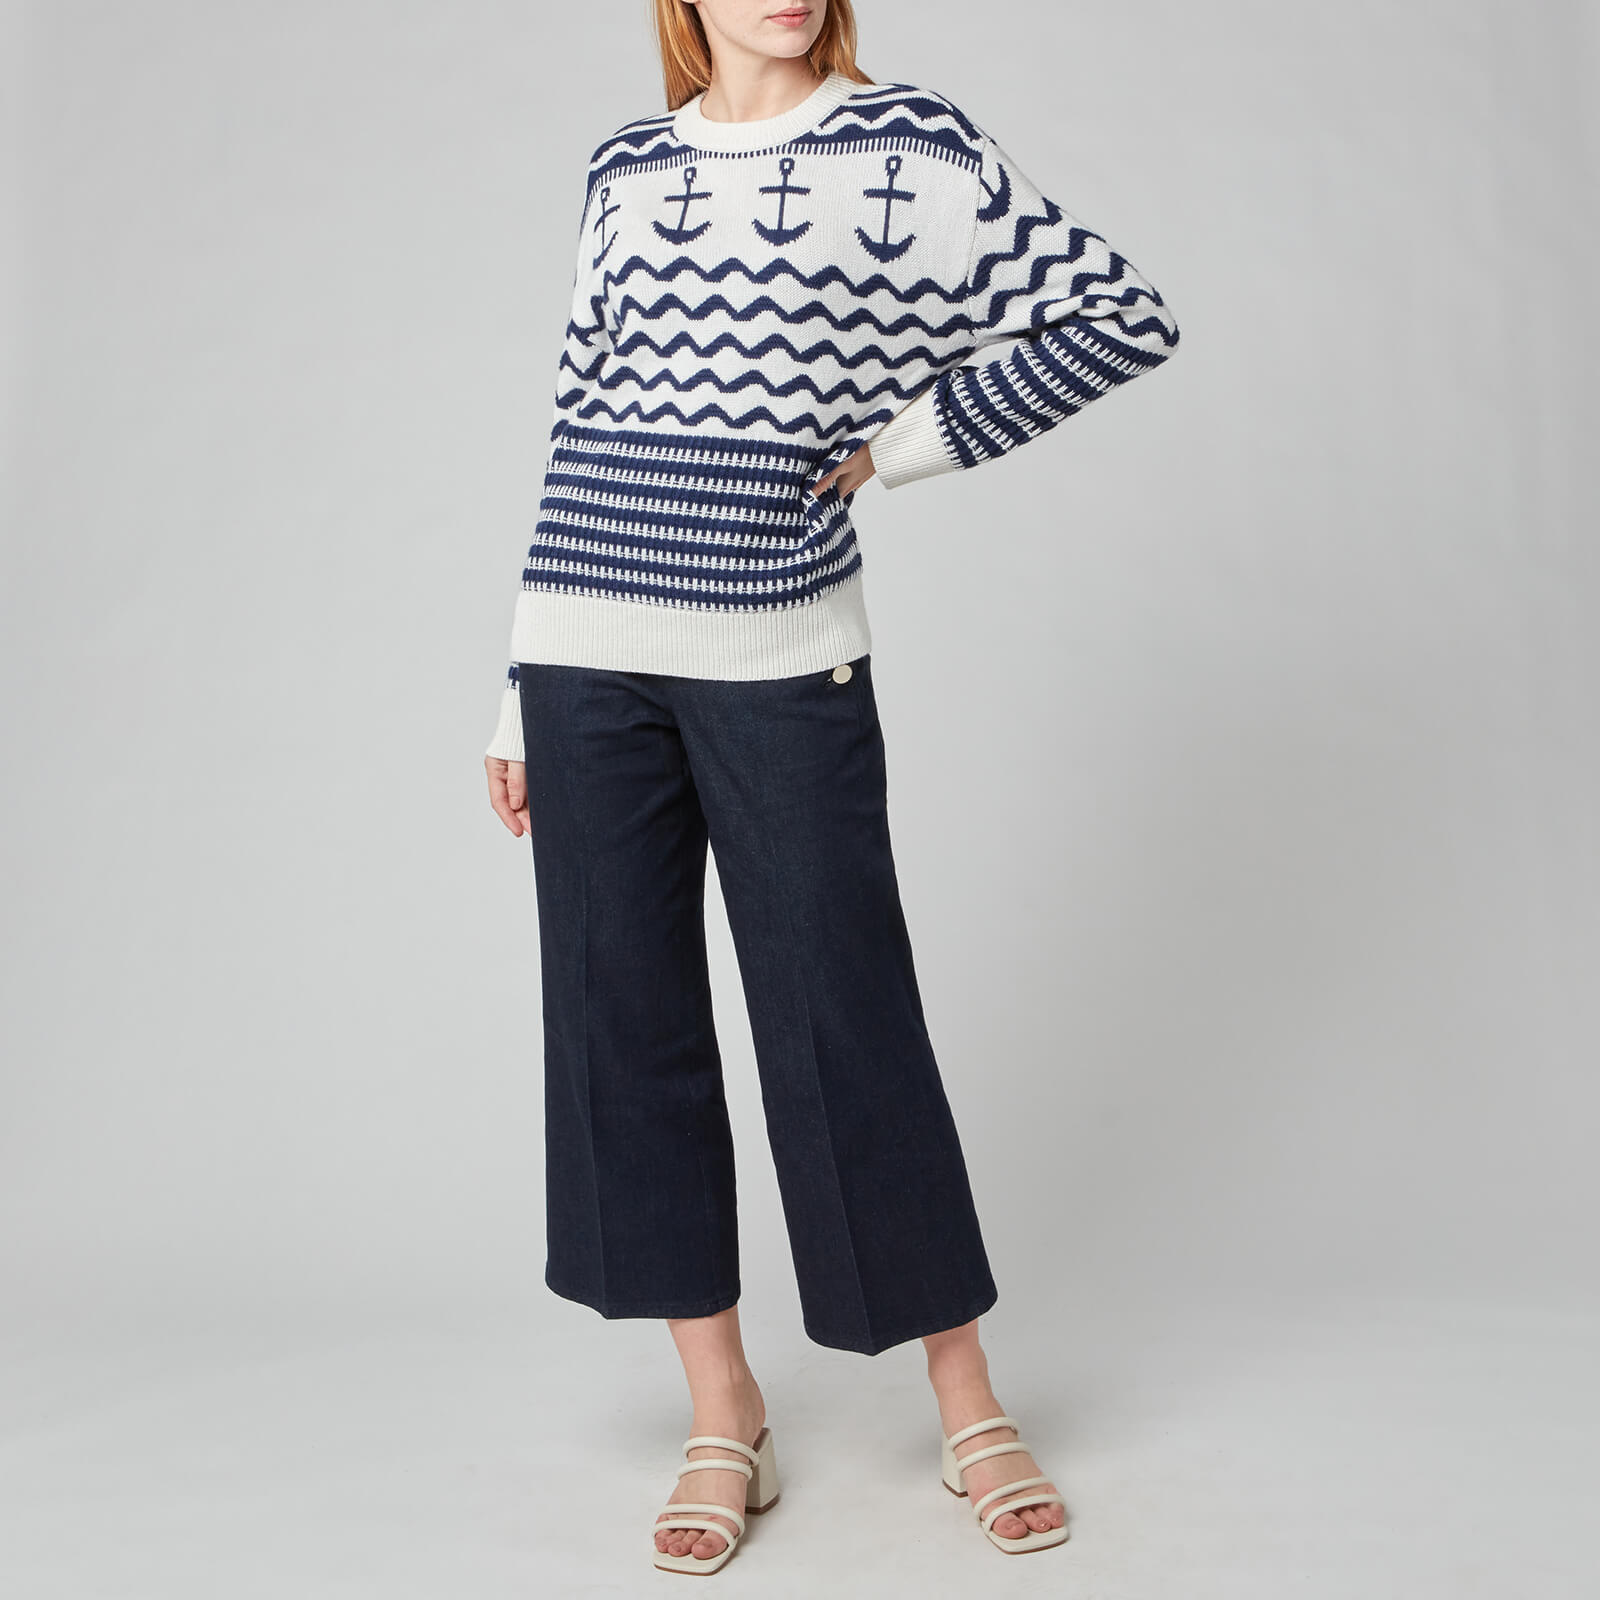 Kate Spade New York Women's Anchor Sweater - French Cream - Xs